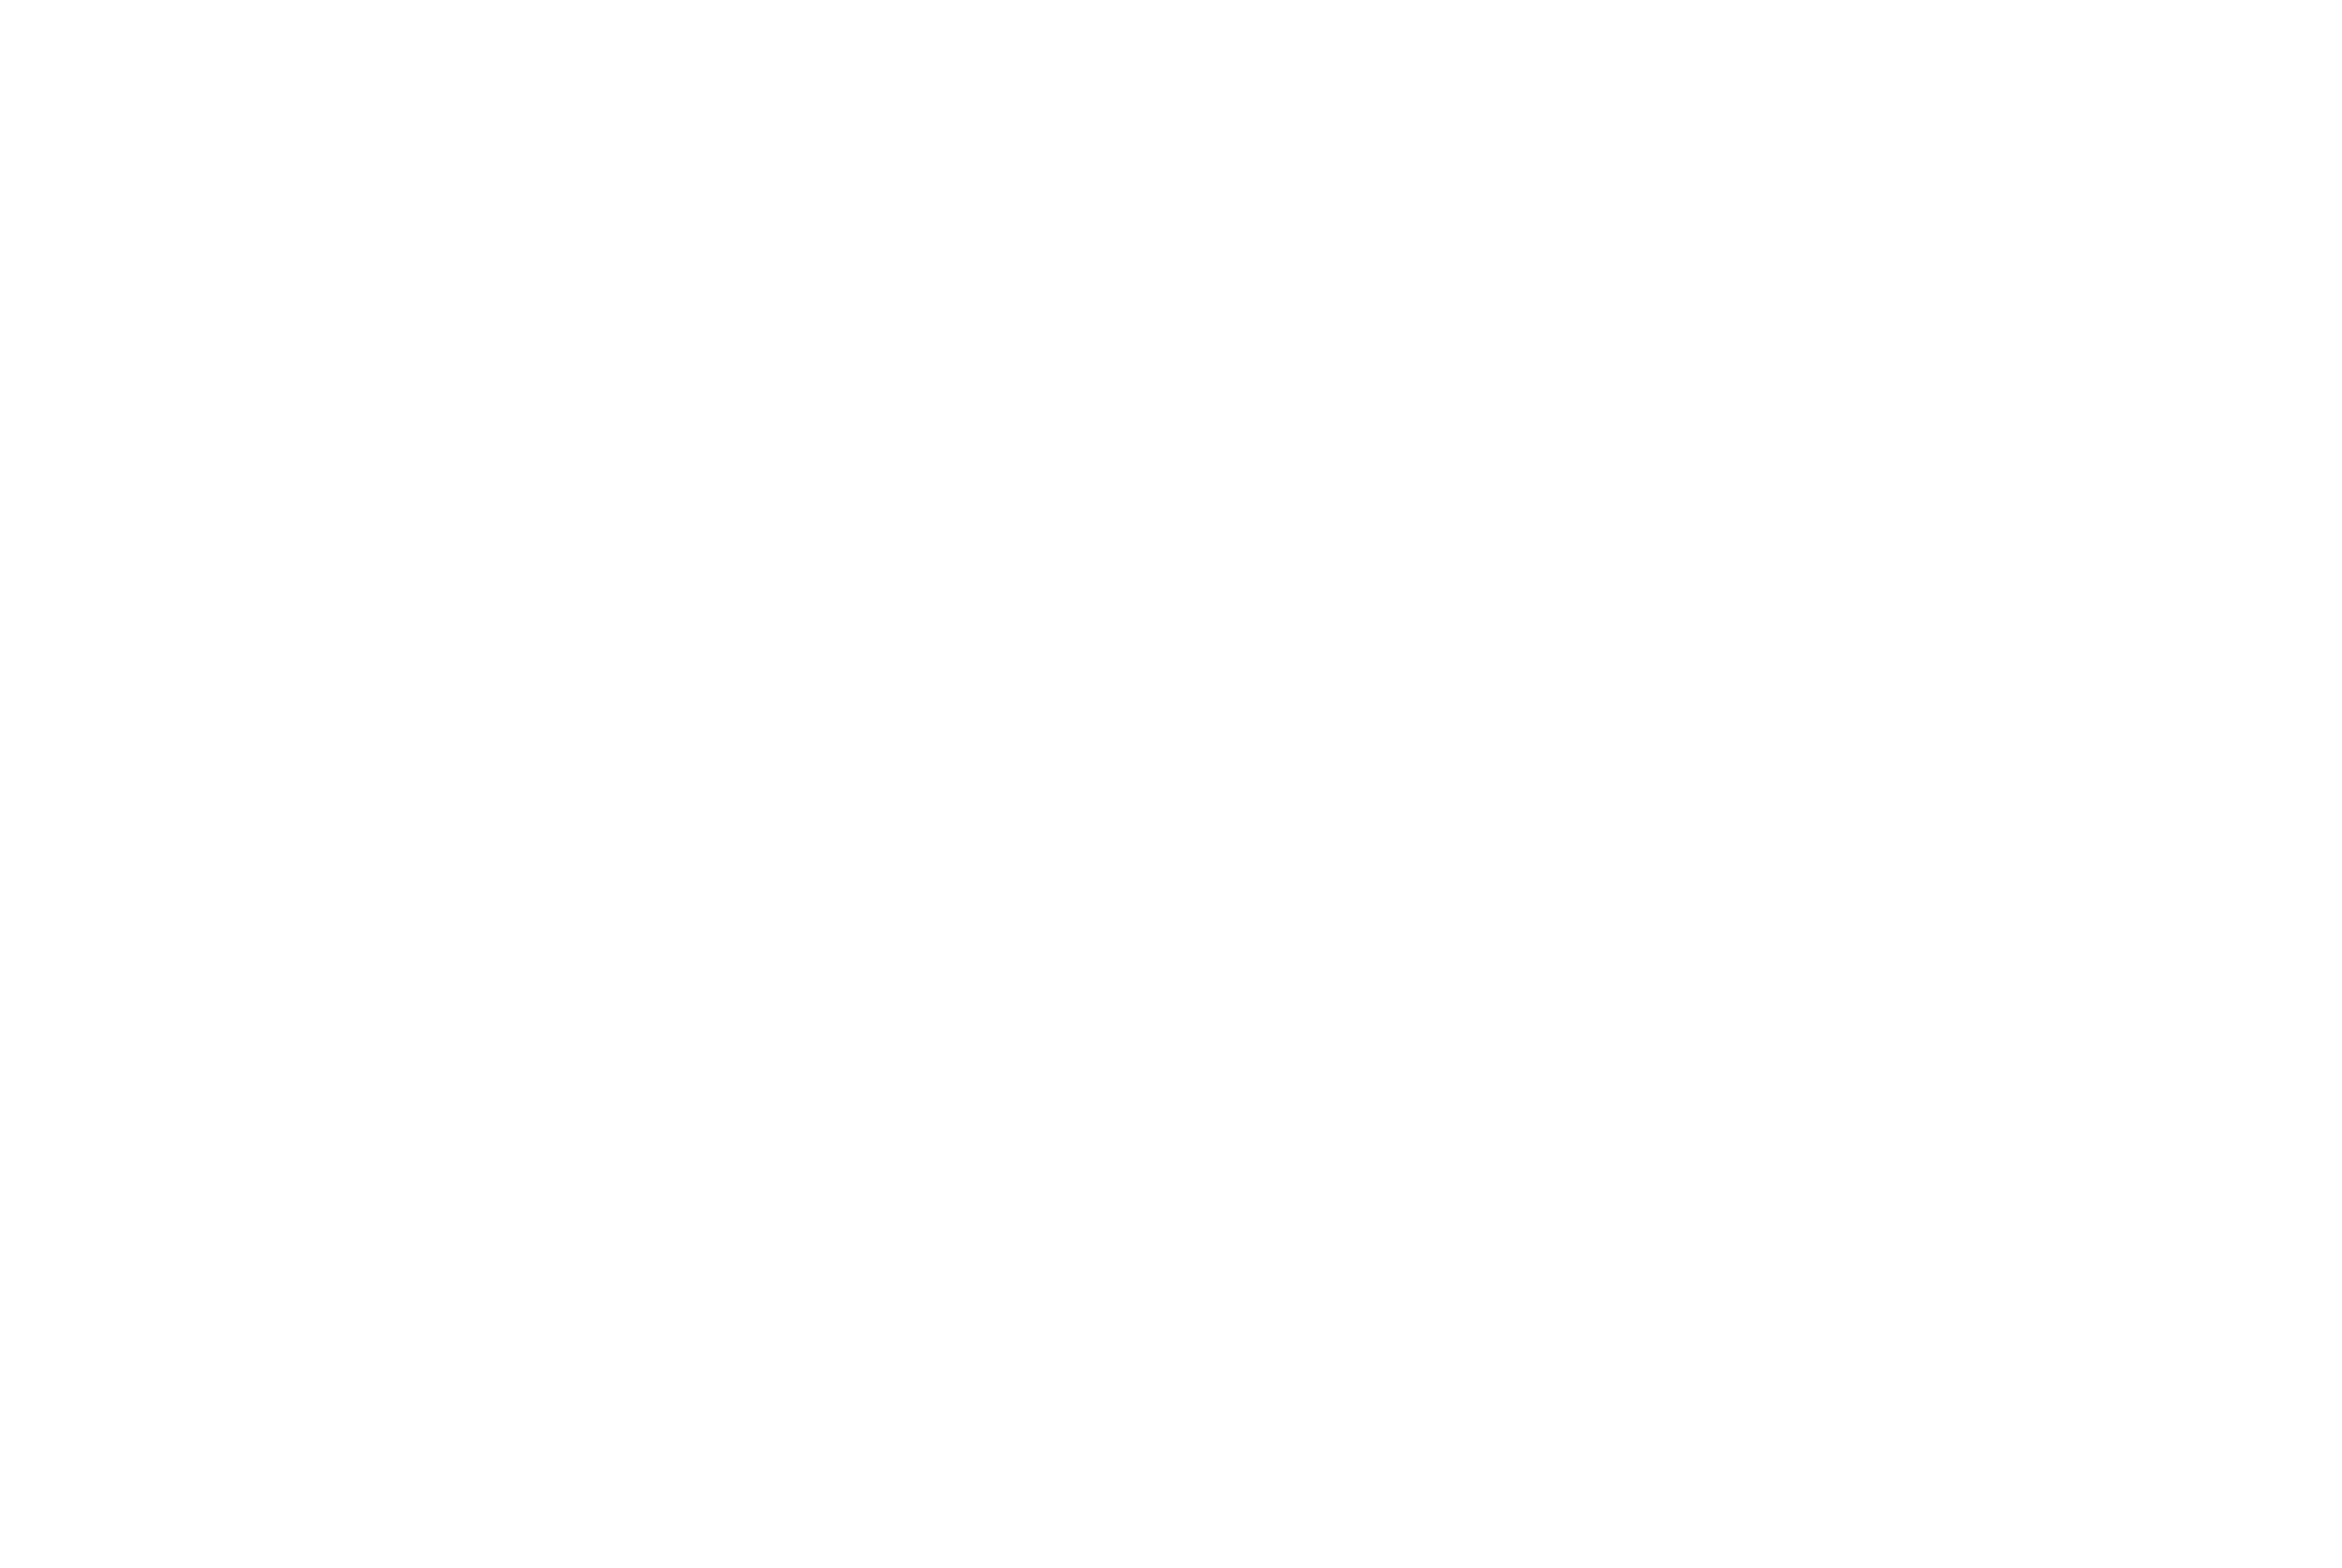 Red Rocks Web Development logo.